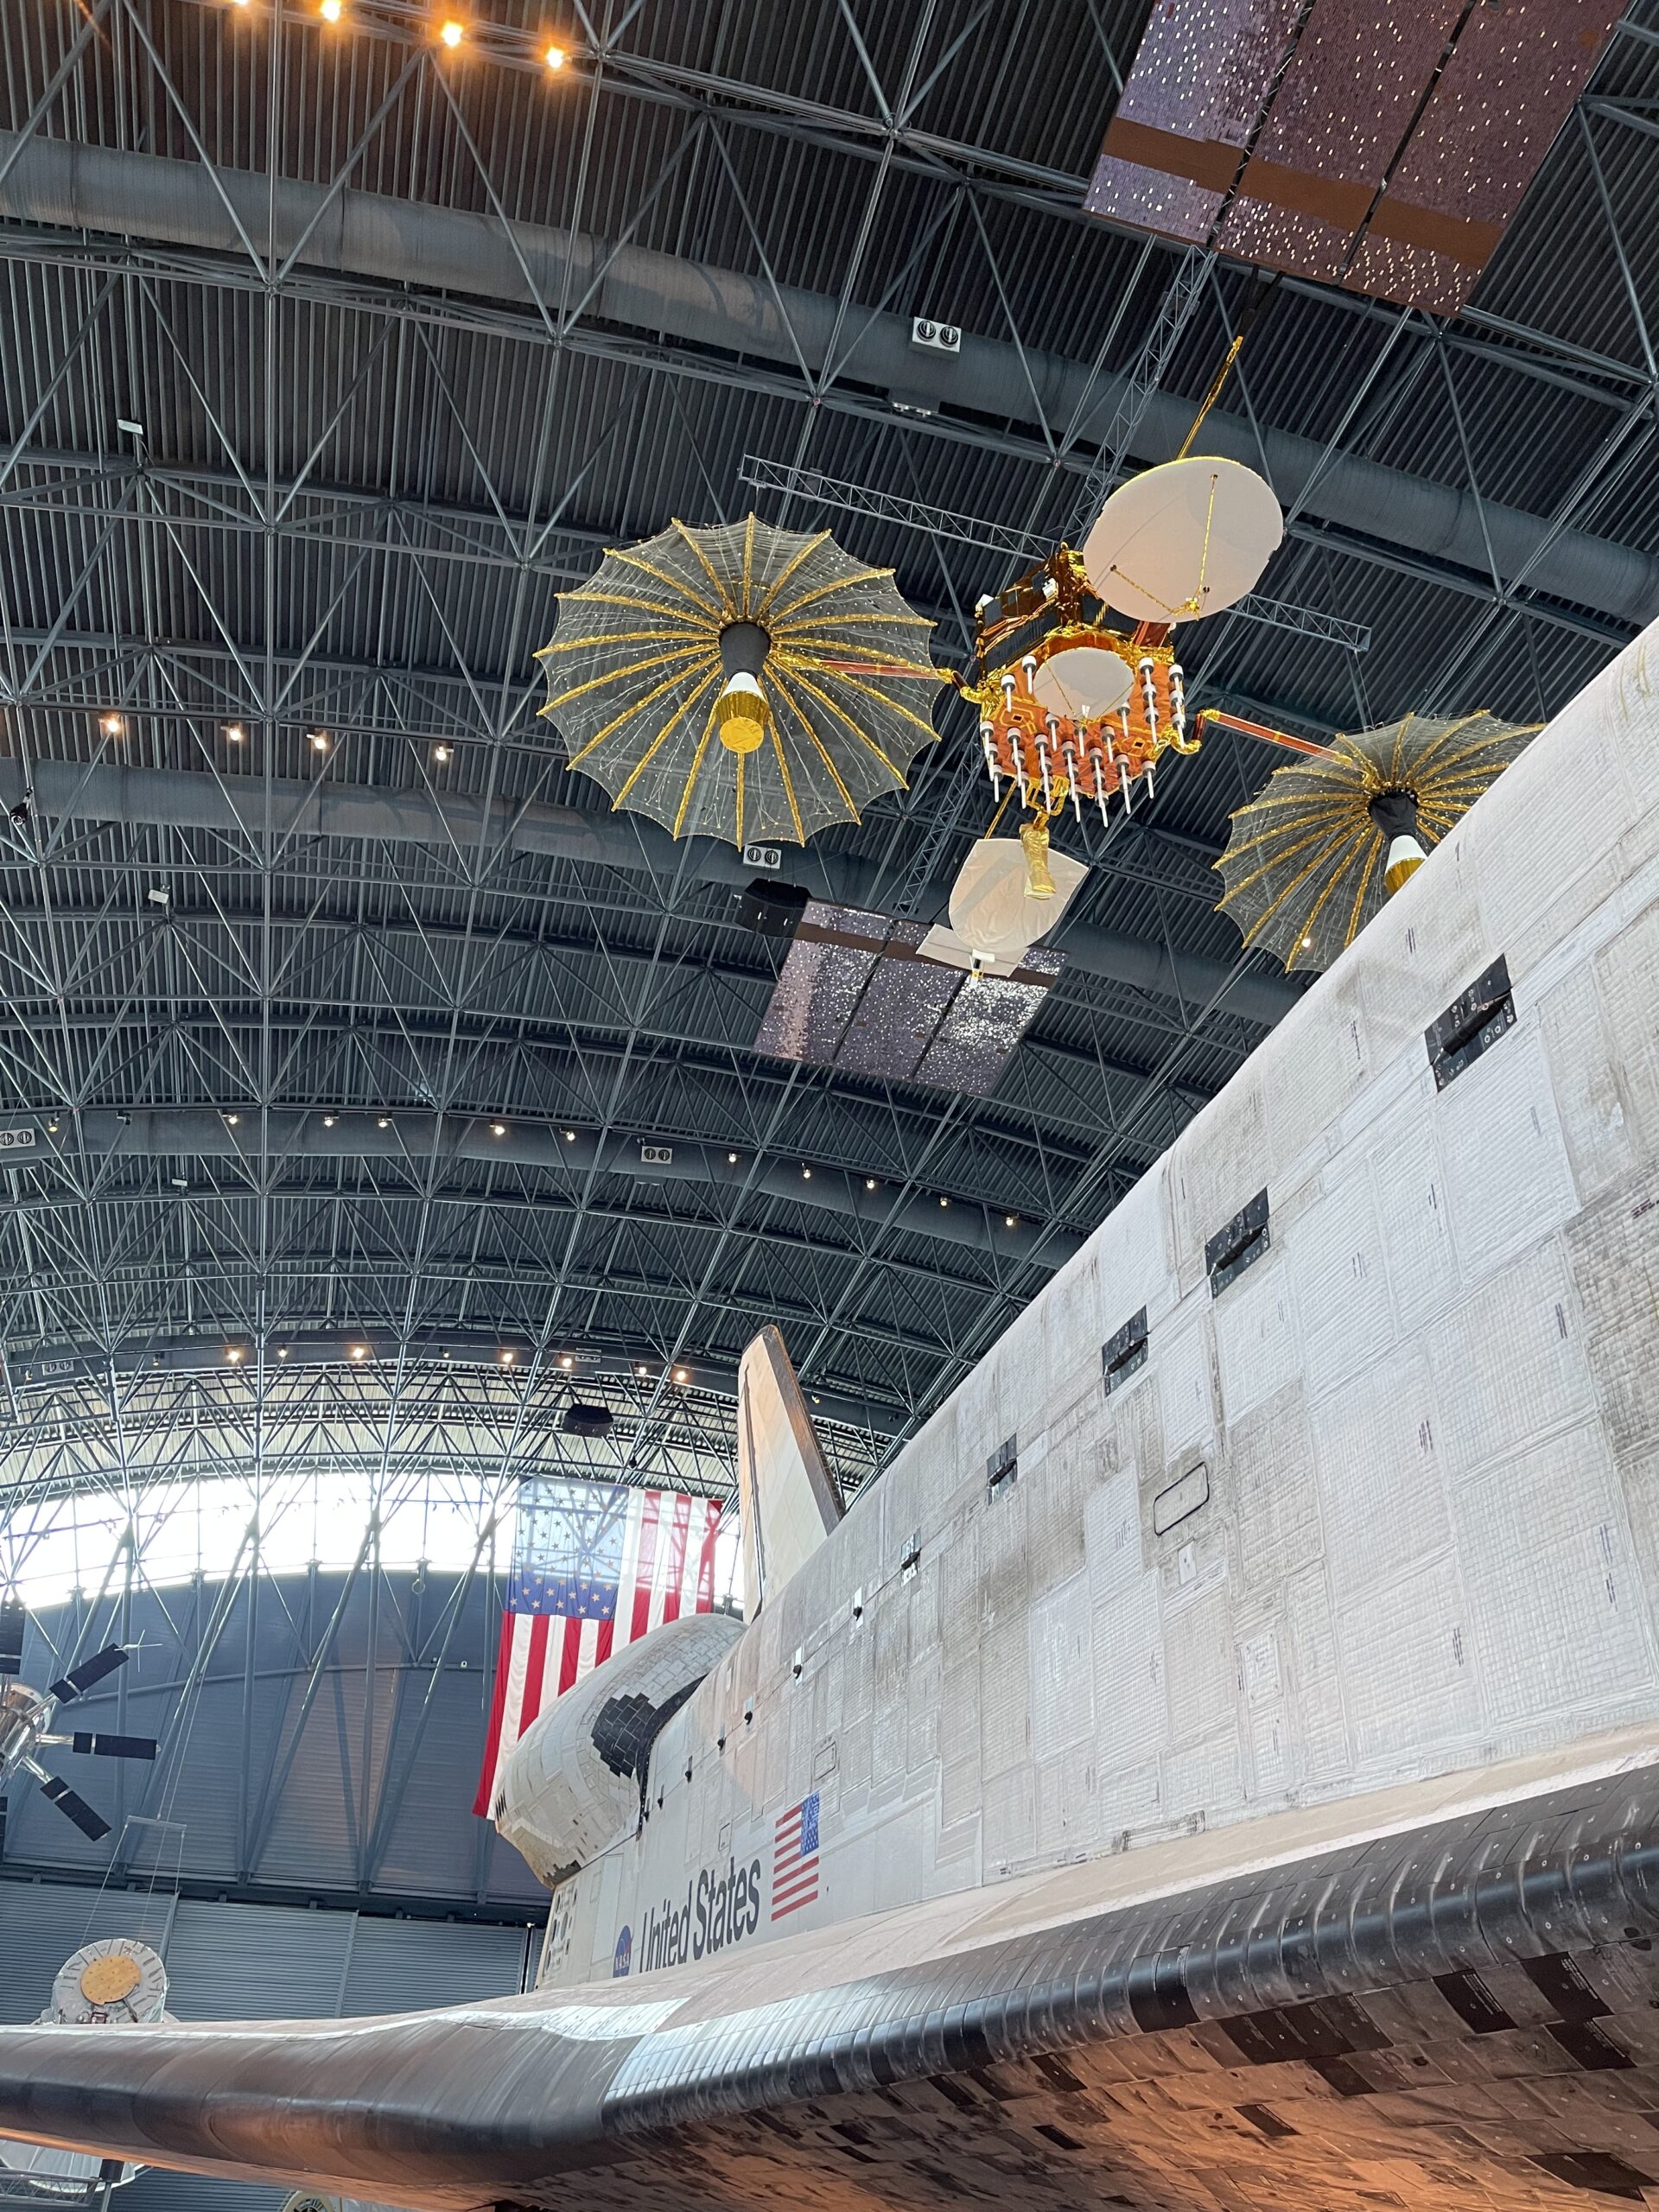 Space Shuttle Discovery - Steven F. Udvar-Hazy Center in Virginia